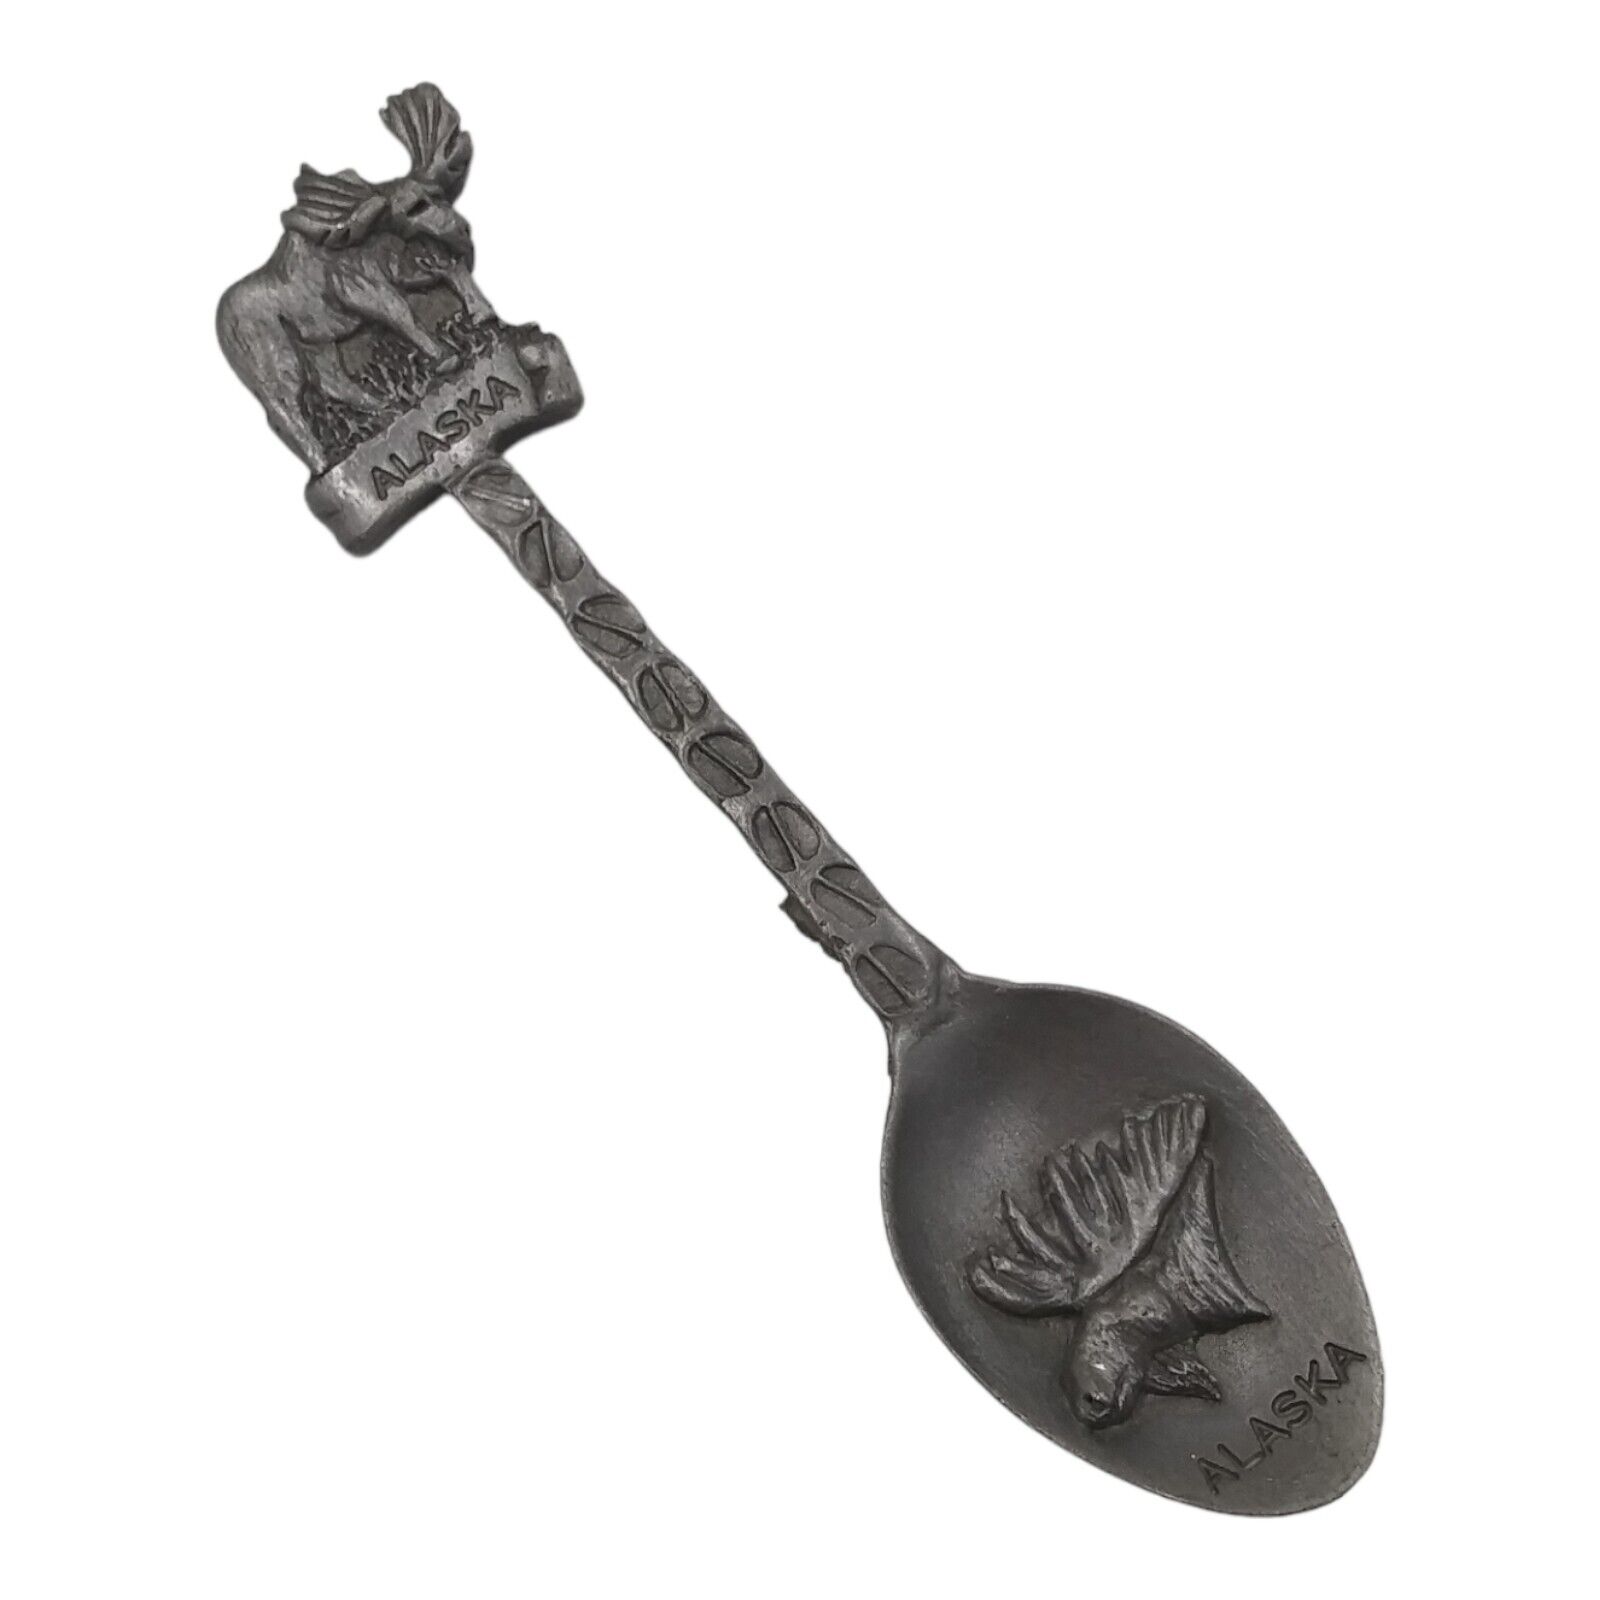 Vintage Alaska Souvenir Spoon US Collectible Moose Pewter